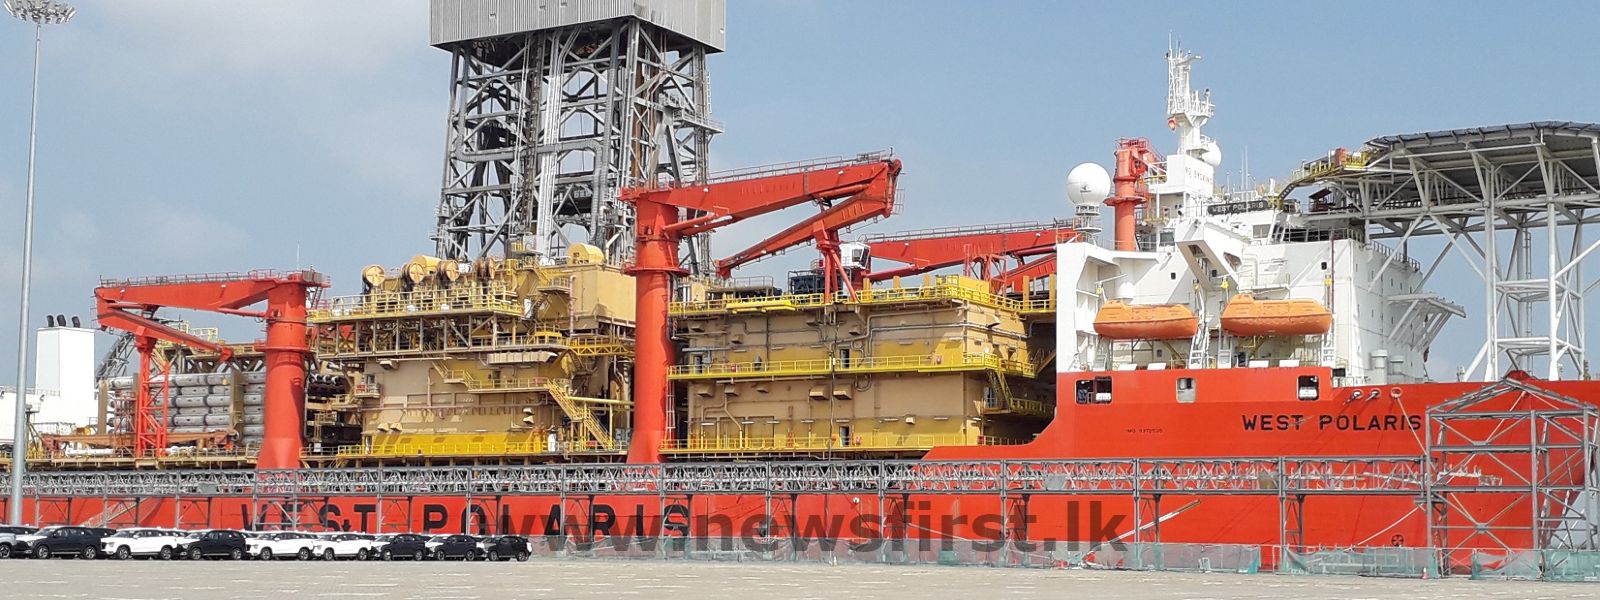 Hambantota port responds to fire onboard Drill Ship ‘West Polaris’